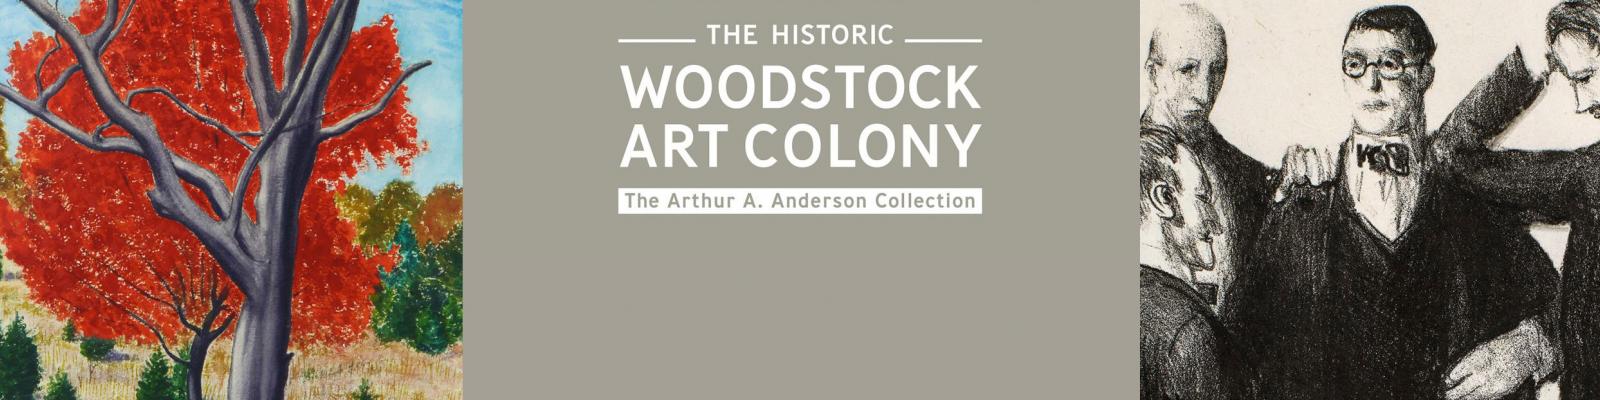 The Historic Woodstock Art Colony 